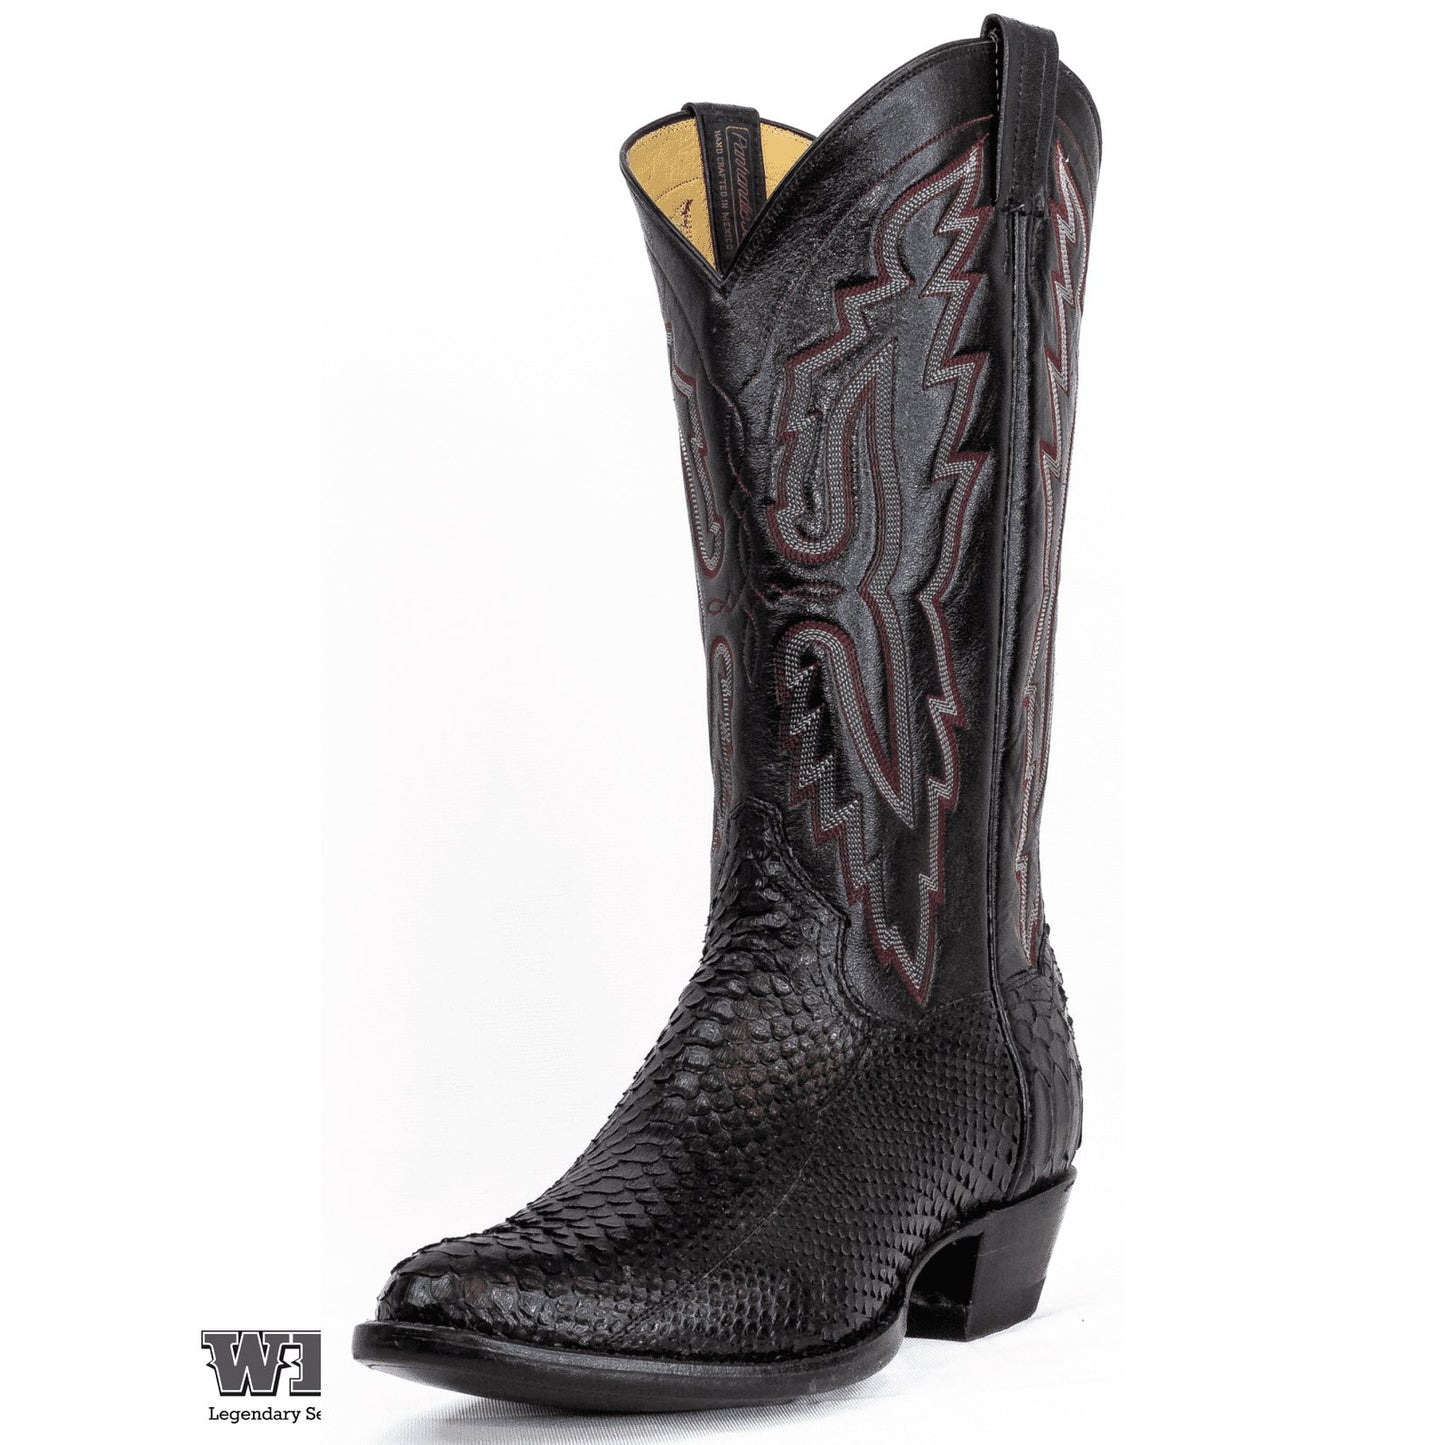 Panhandle Slim Men's Cowboy Boots 13" Black Python Snake Cowboy Heel R Toe 25330 - Panhandle Slim Boots